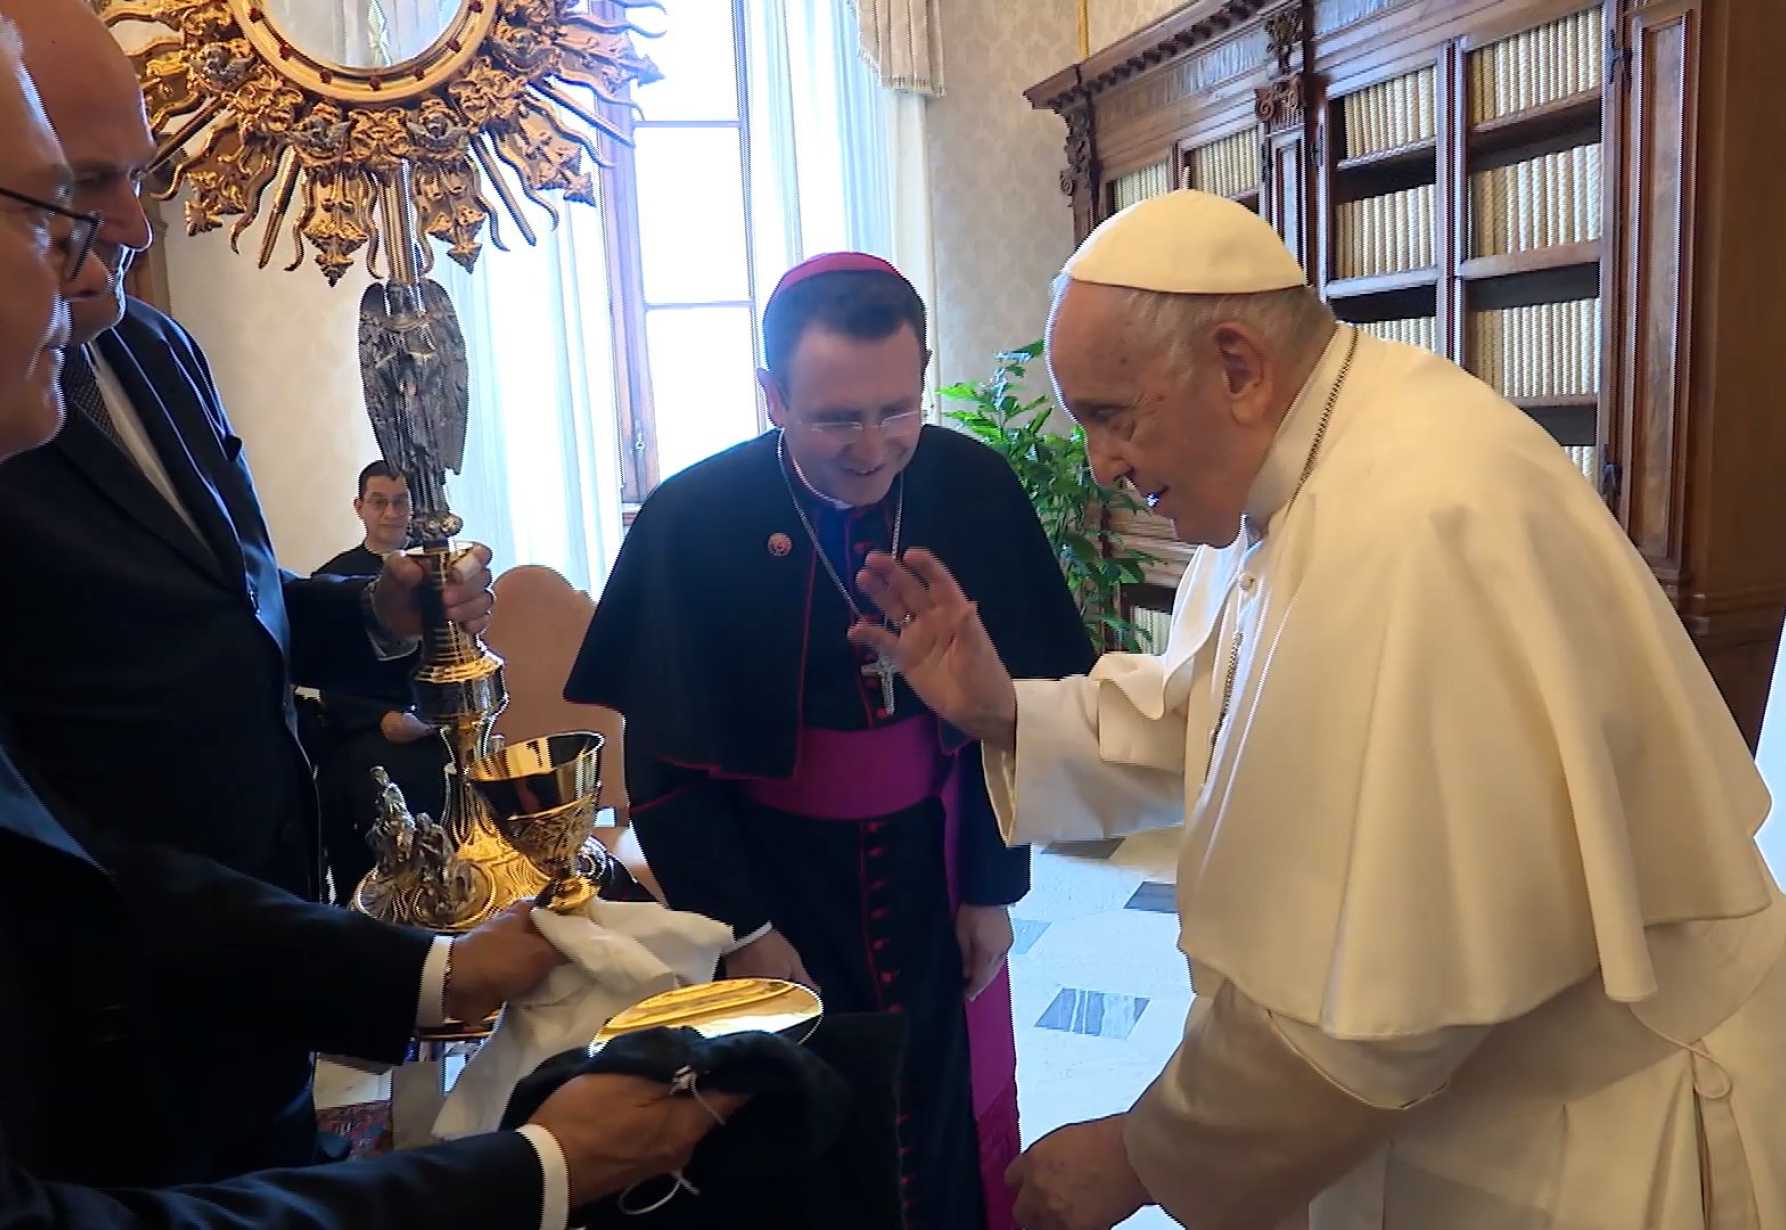 Adore Jesus' real presence in the Eucharist, pope tells U.S. Catholics